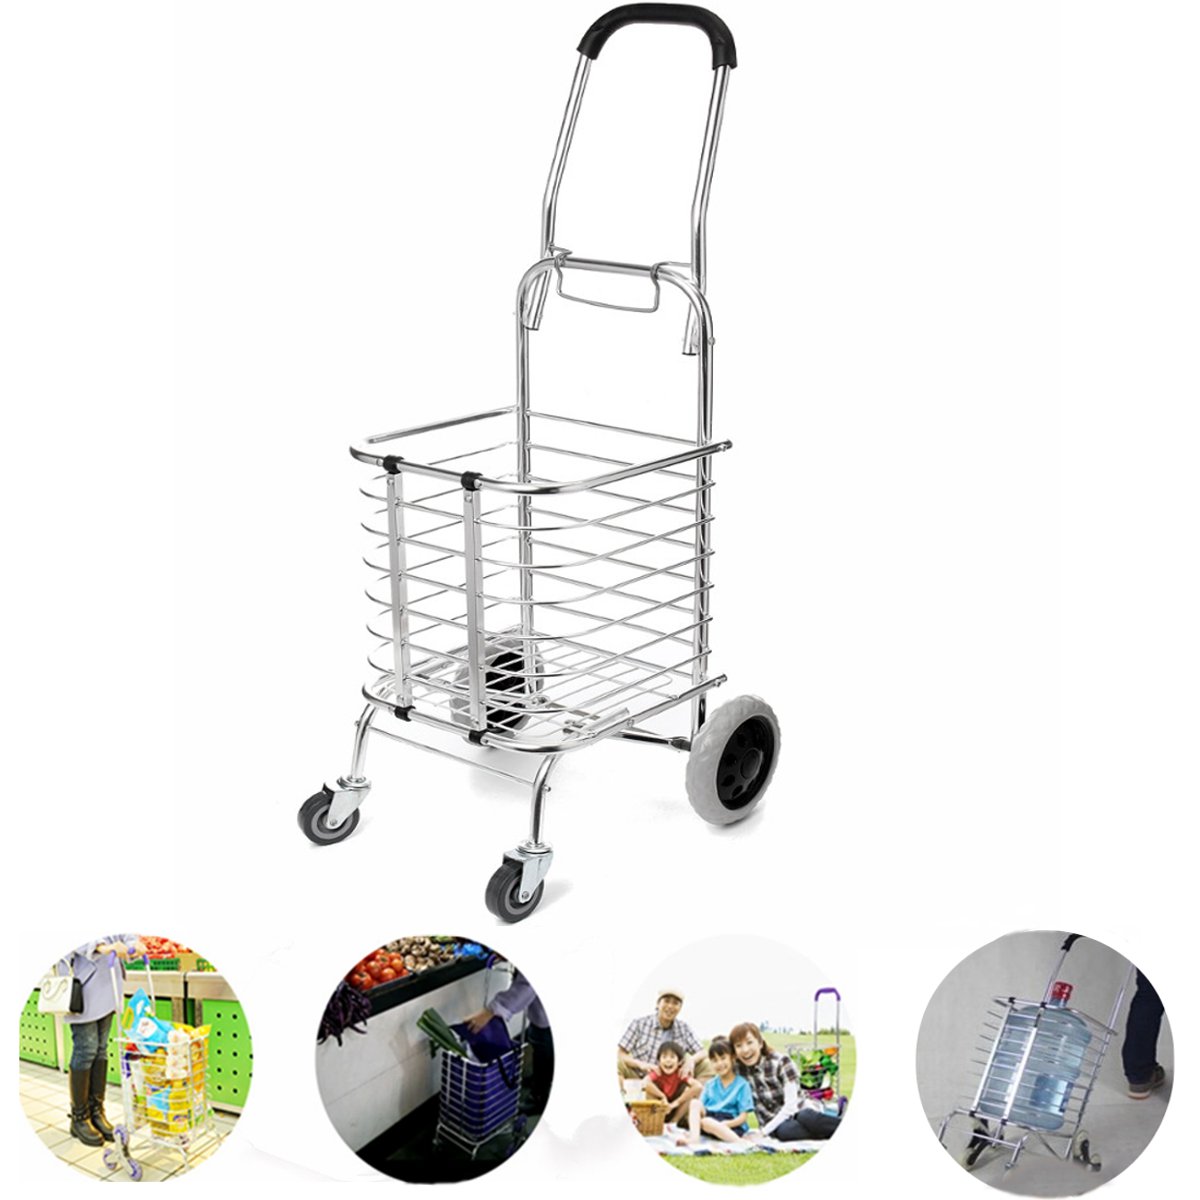 Folding-Portable-Shopping-Basket-Cart-Trolley-Trailer-Four-Wheels-Aluminum-Alloy-Storage-Baskets-1395807